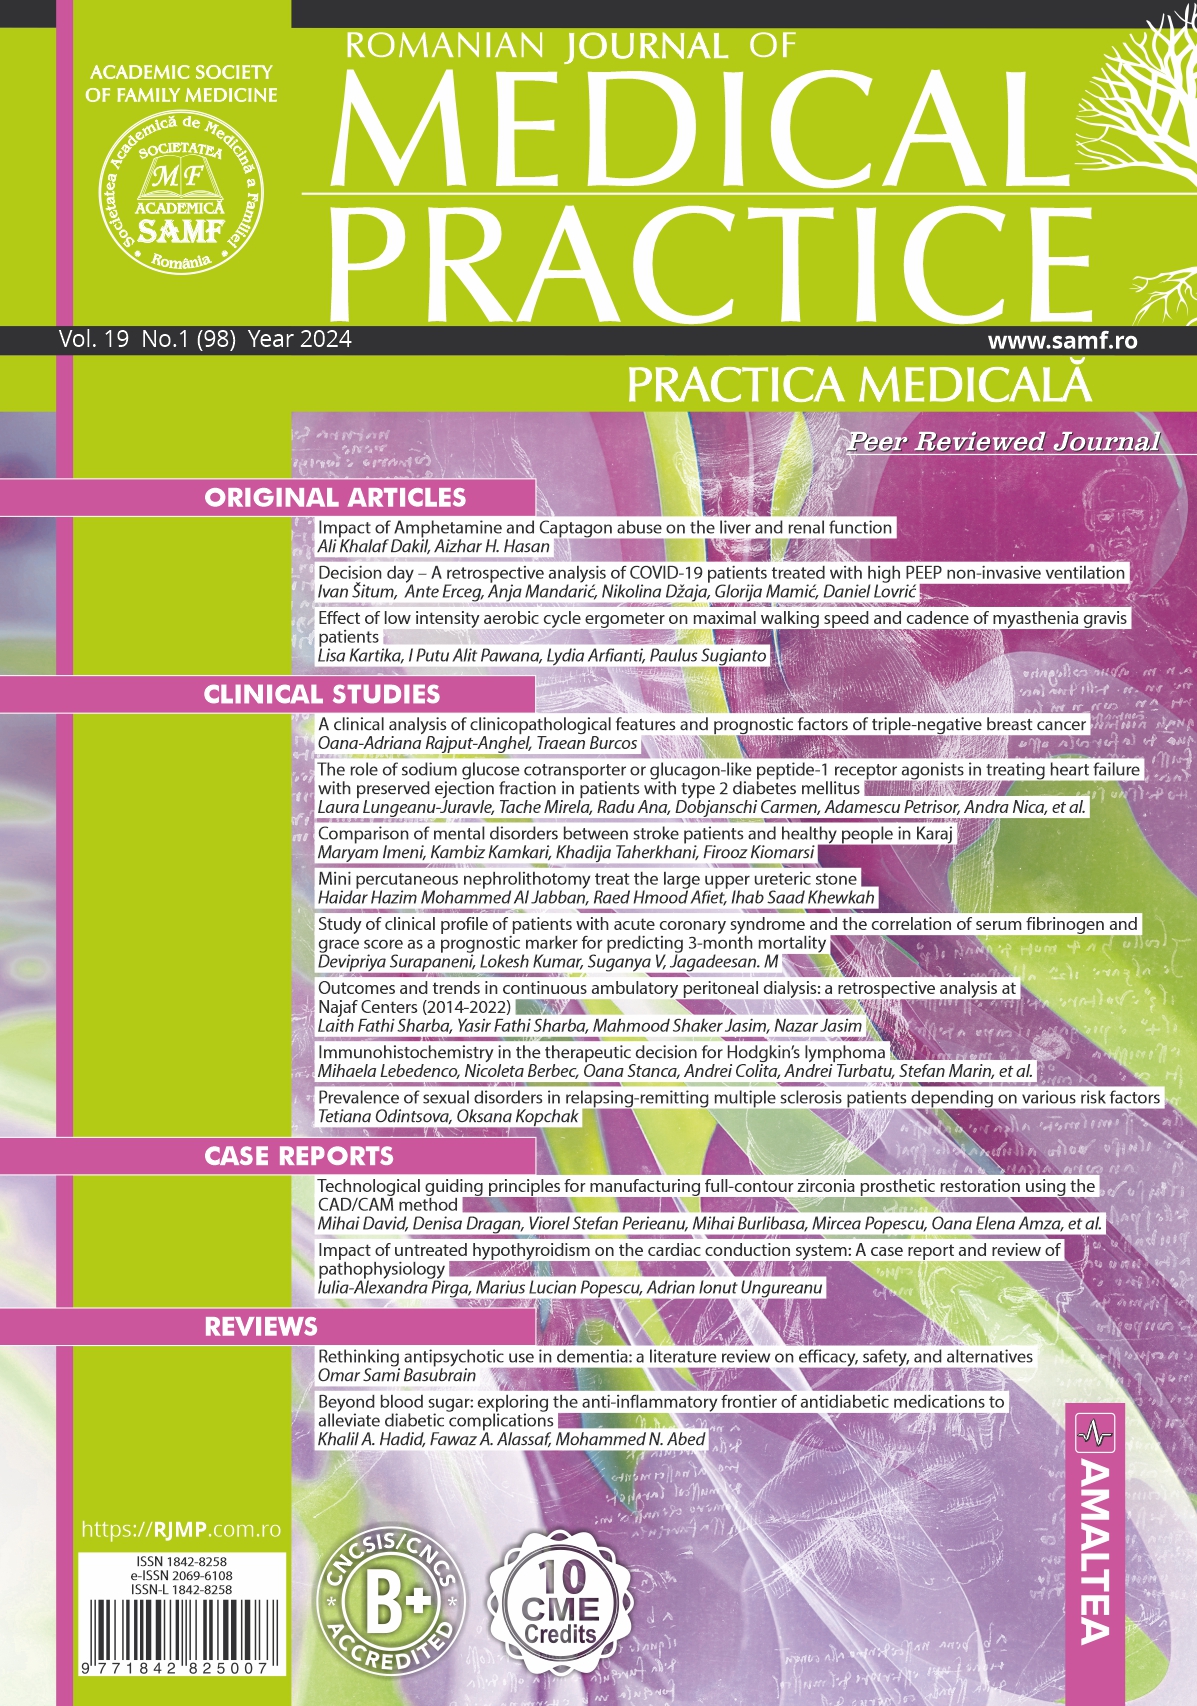 Romanian Journal of Medical Practice | Practica Medicala, Vol. 19, No. 1 (98), 2024